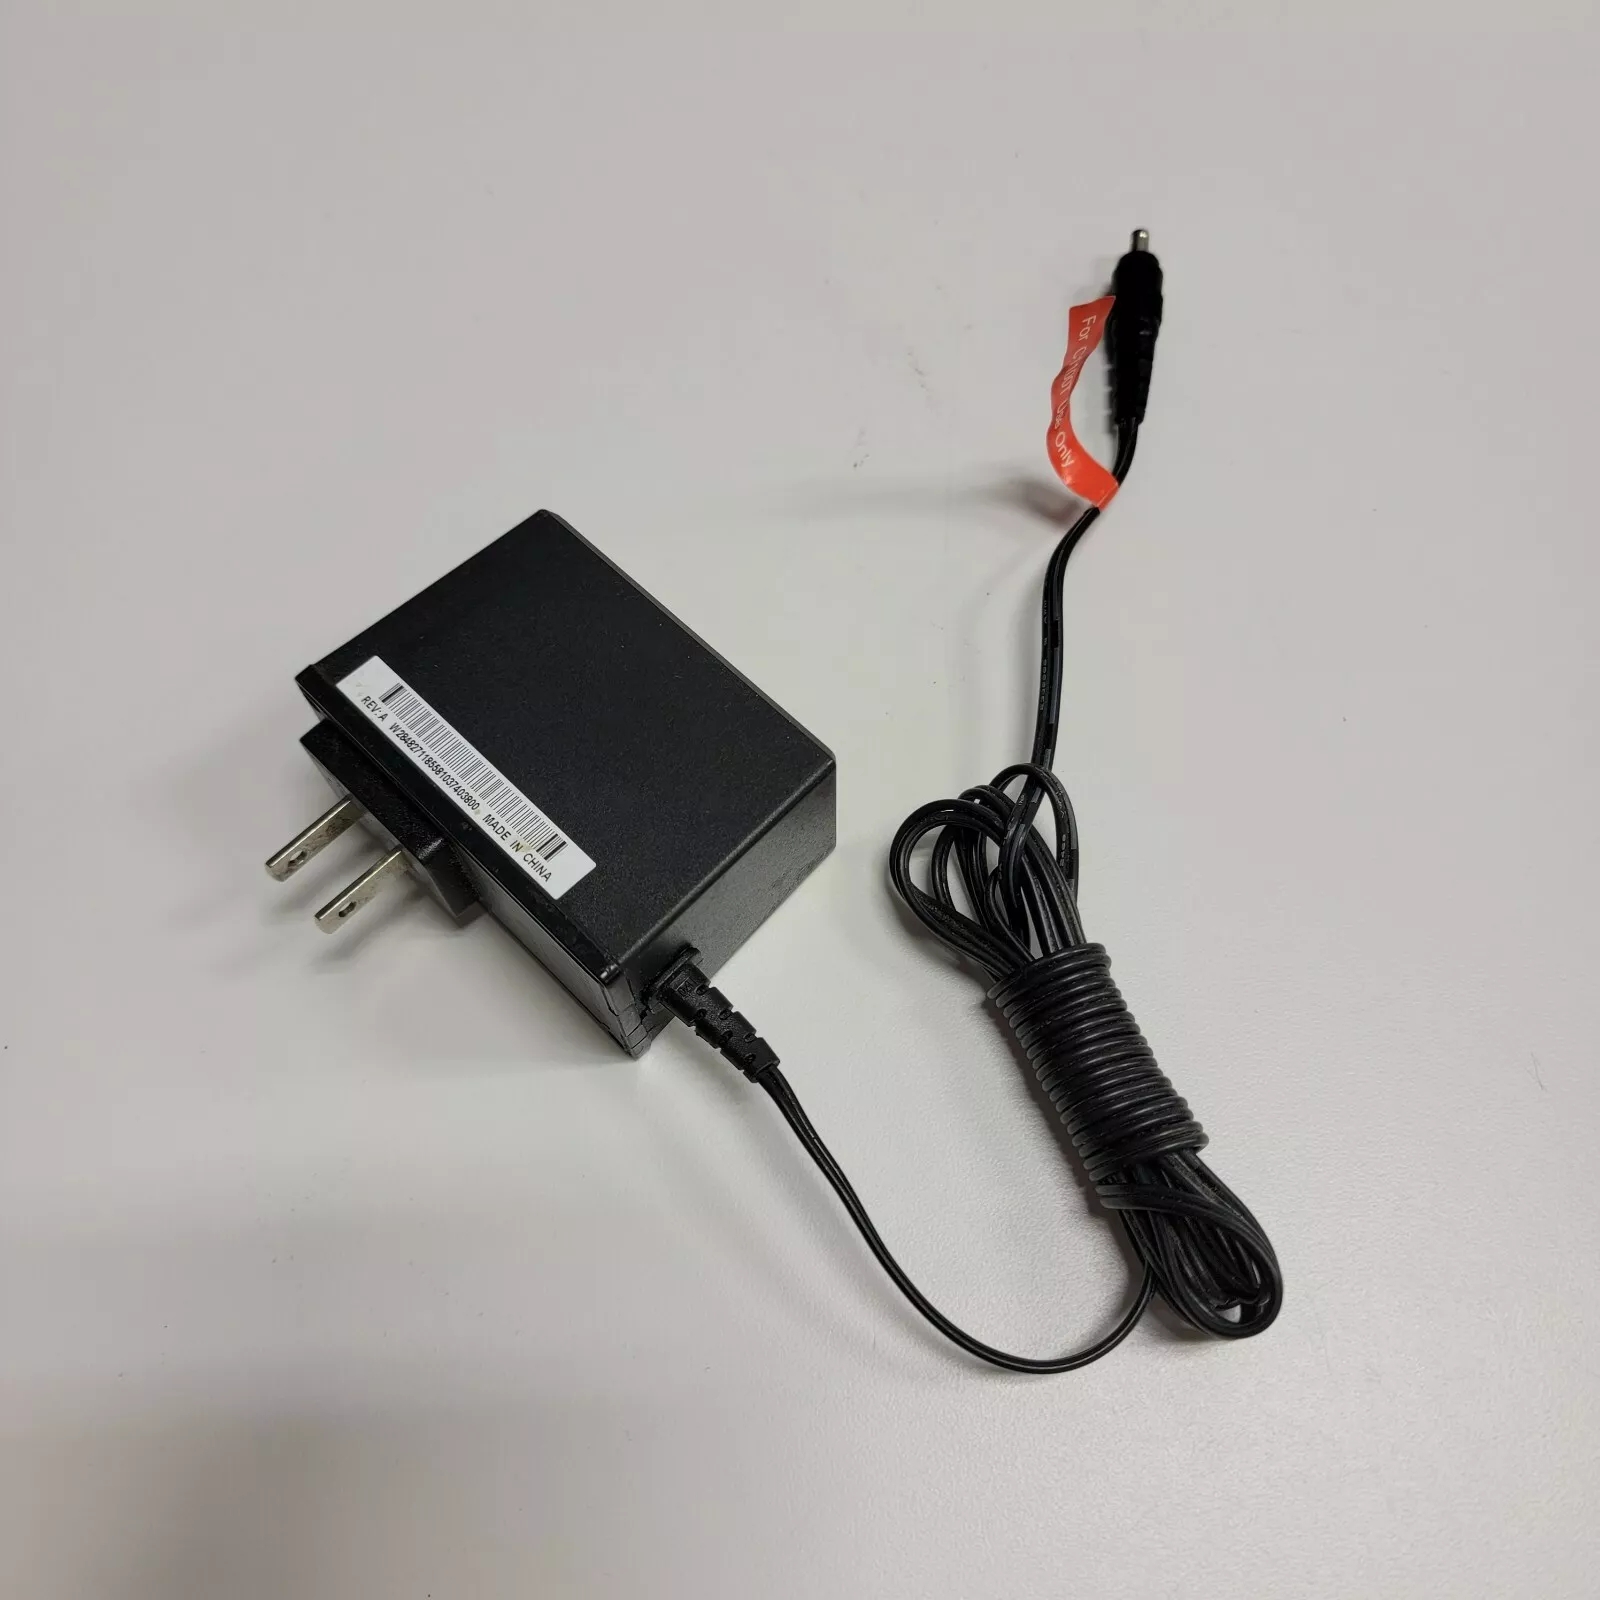 *Brand NEW*Original AcBel DSL37403800 12 V 1.5A AC Adapter for C1100T DSL Modem. WAF008 Power Supply - Click Image to Close